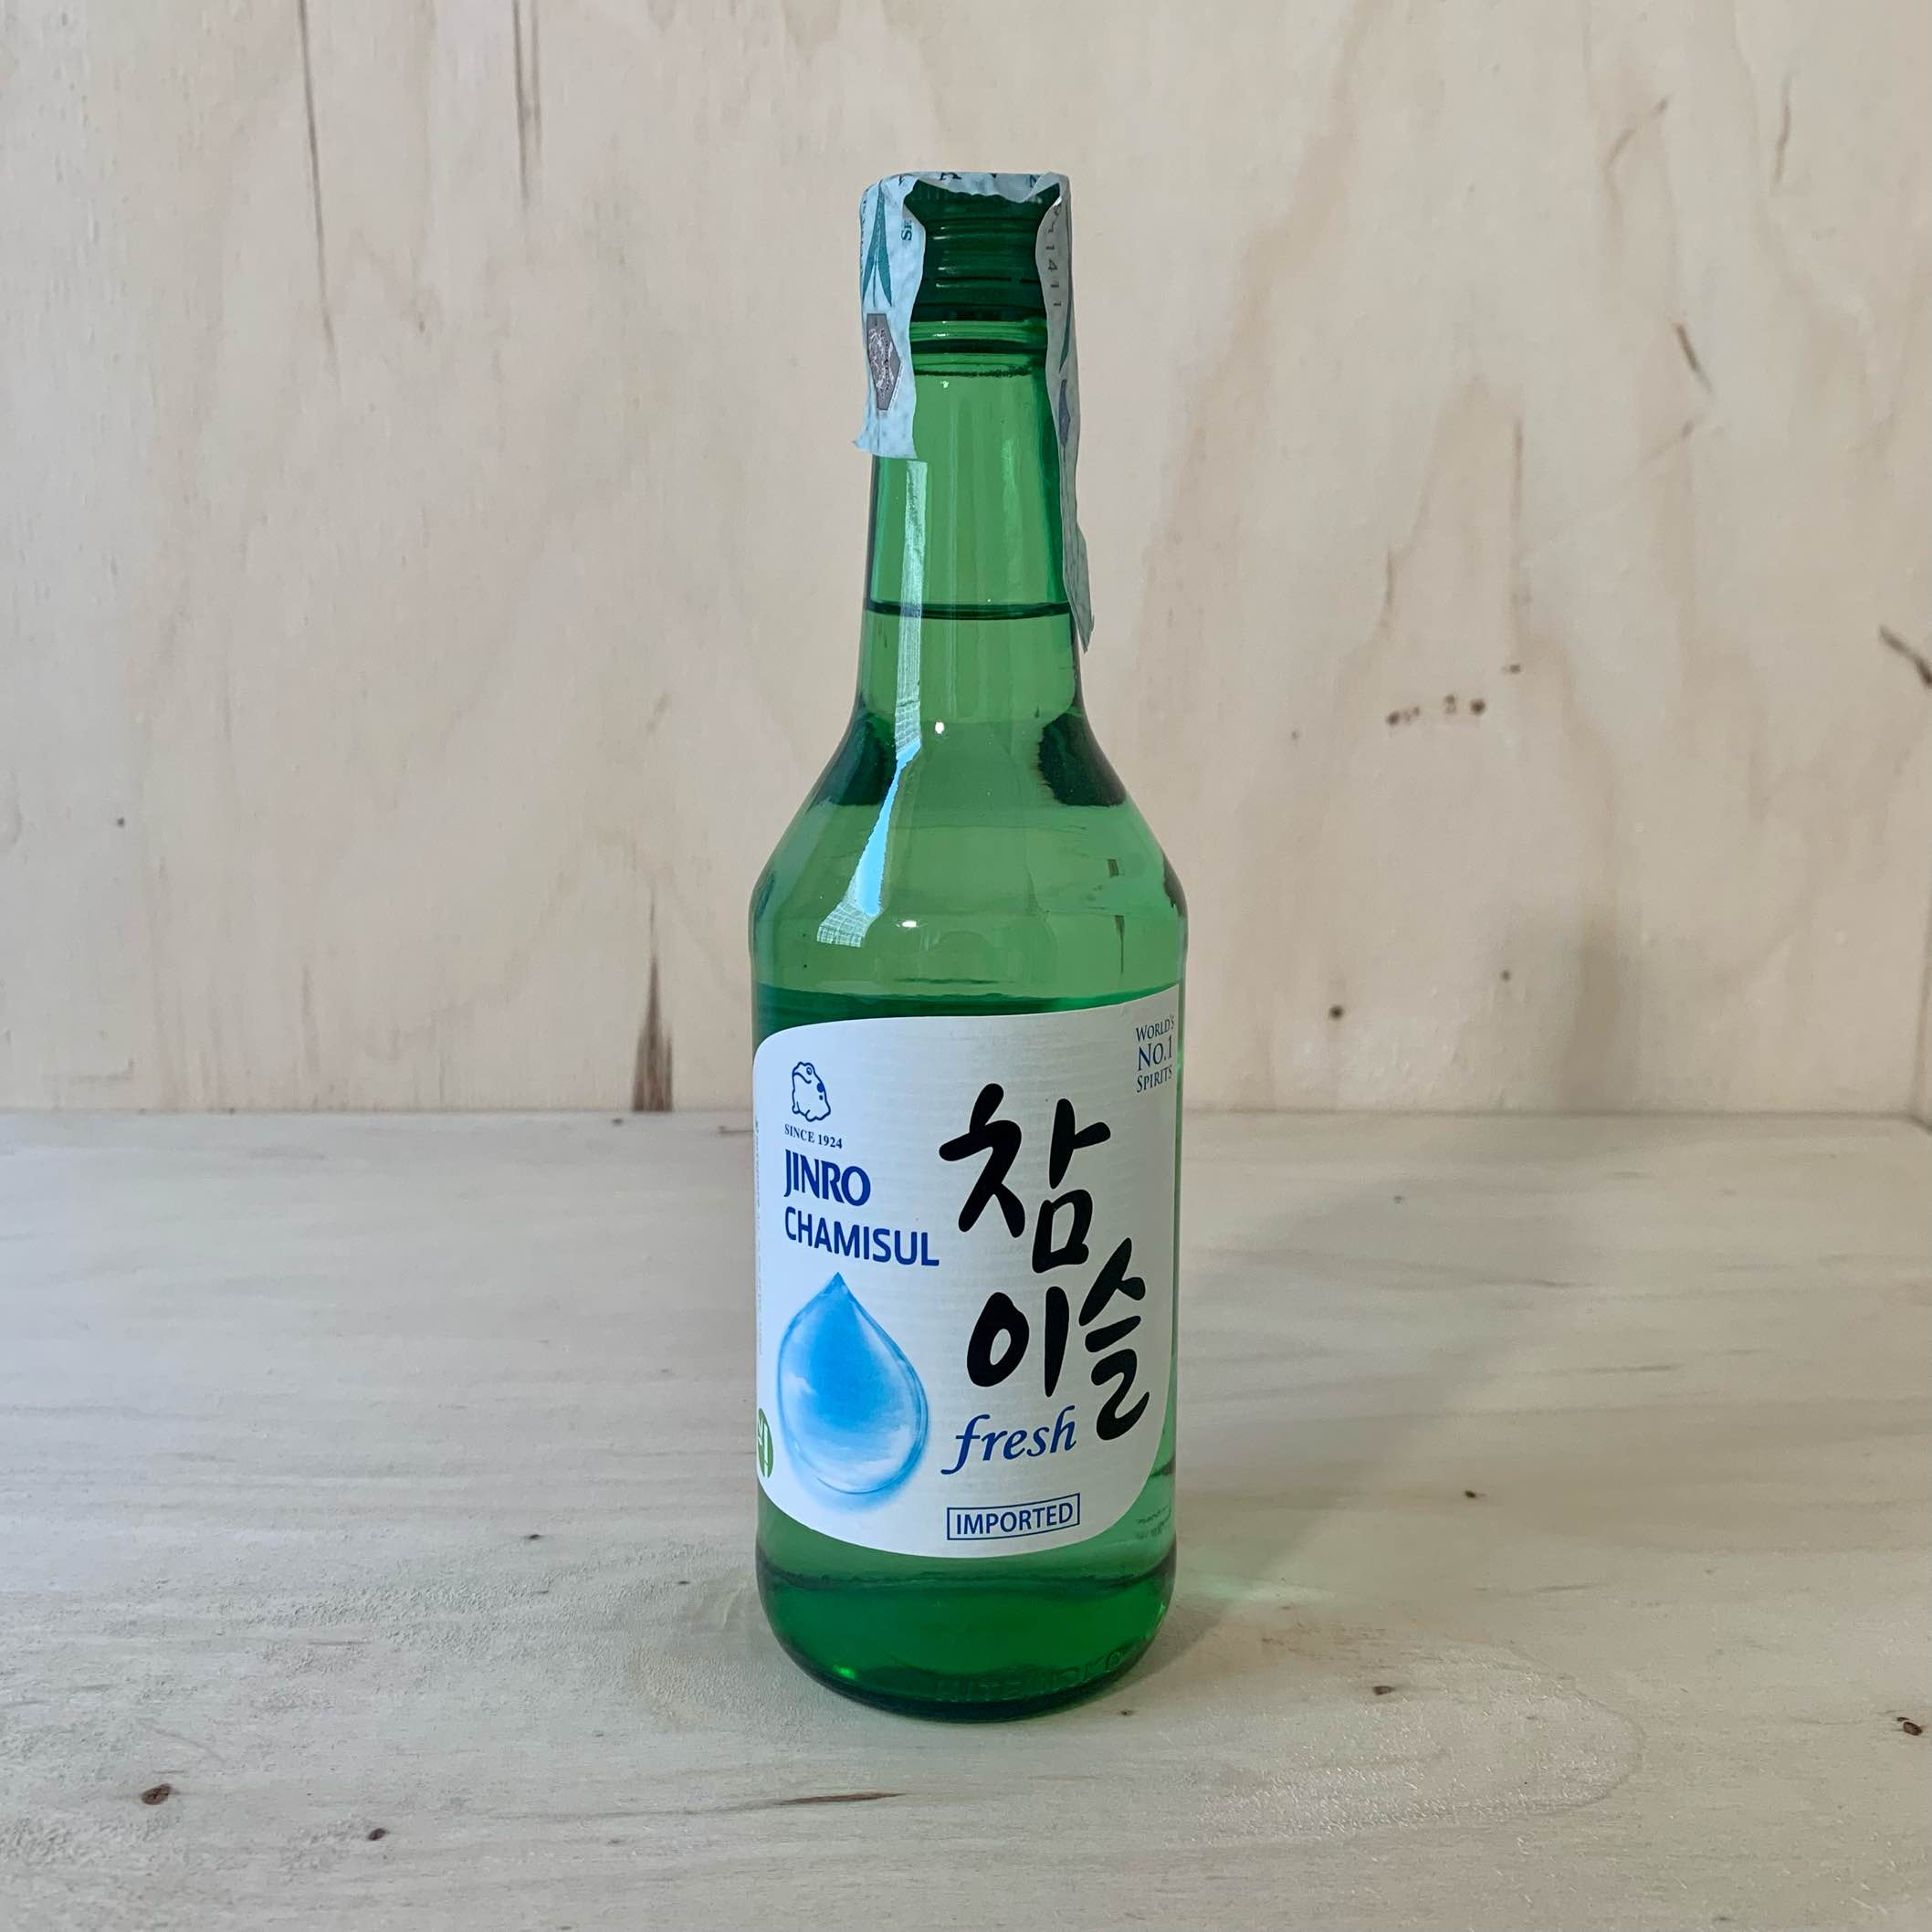 Soju Chamisul Fresh 16.5% 350ml - Korean Liquor - Jinro